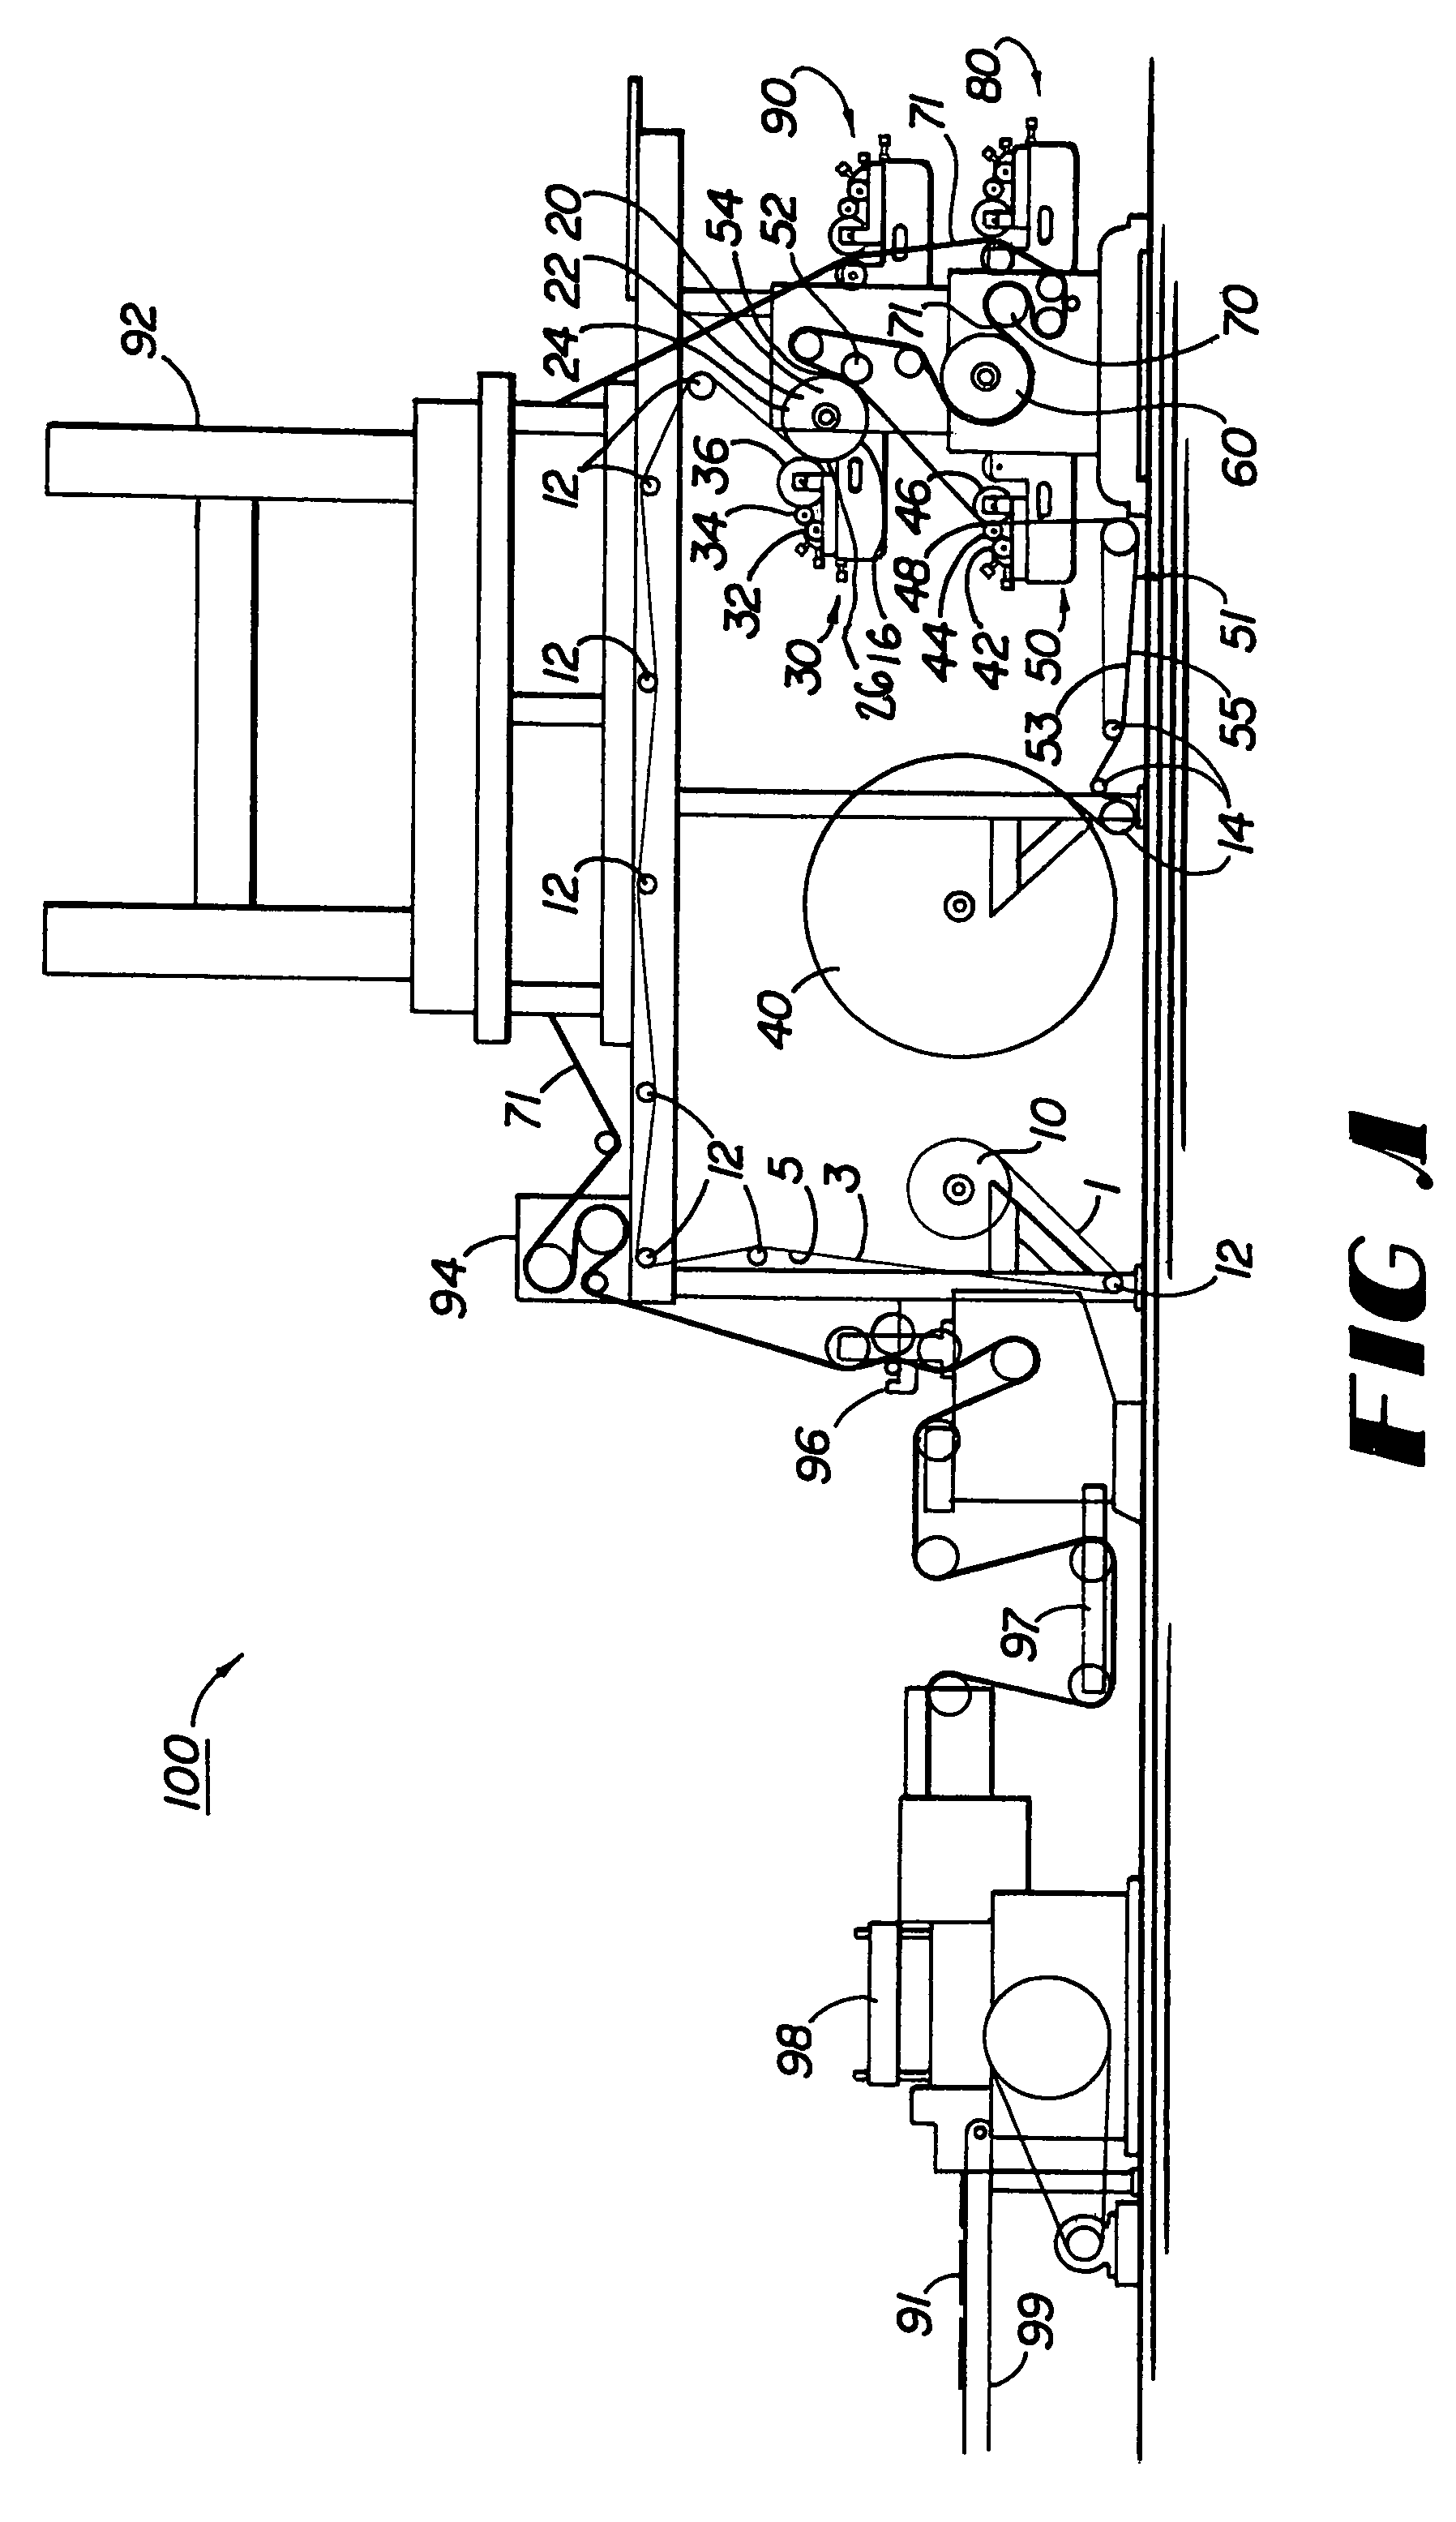 Apparatus and method for demetallizing a metallized film